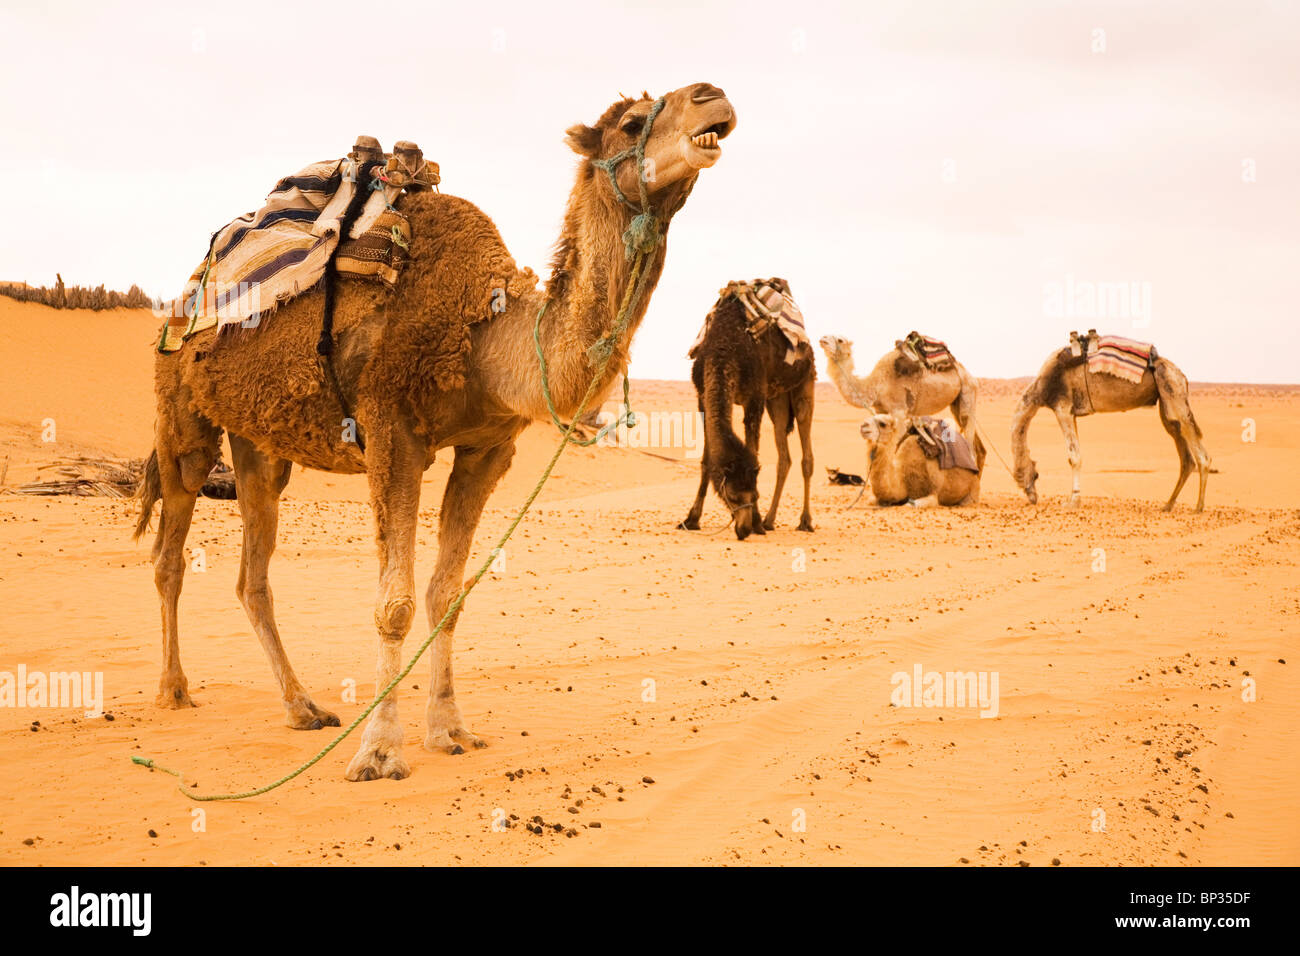 Dromedary camels stand in the Sahara Desert at Ksar Ghilane, Tunisia. Stock Photo